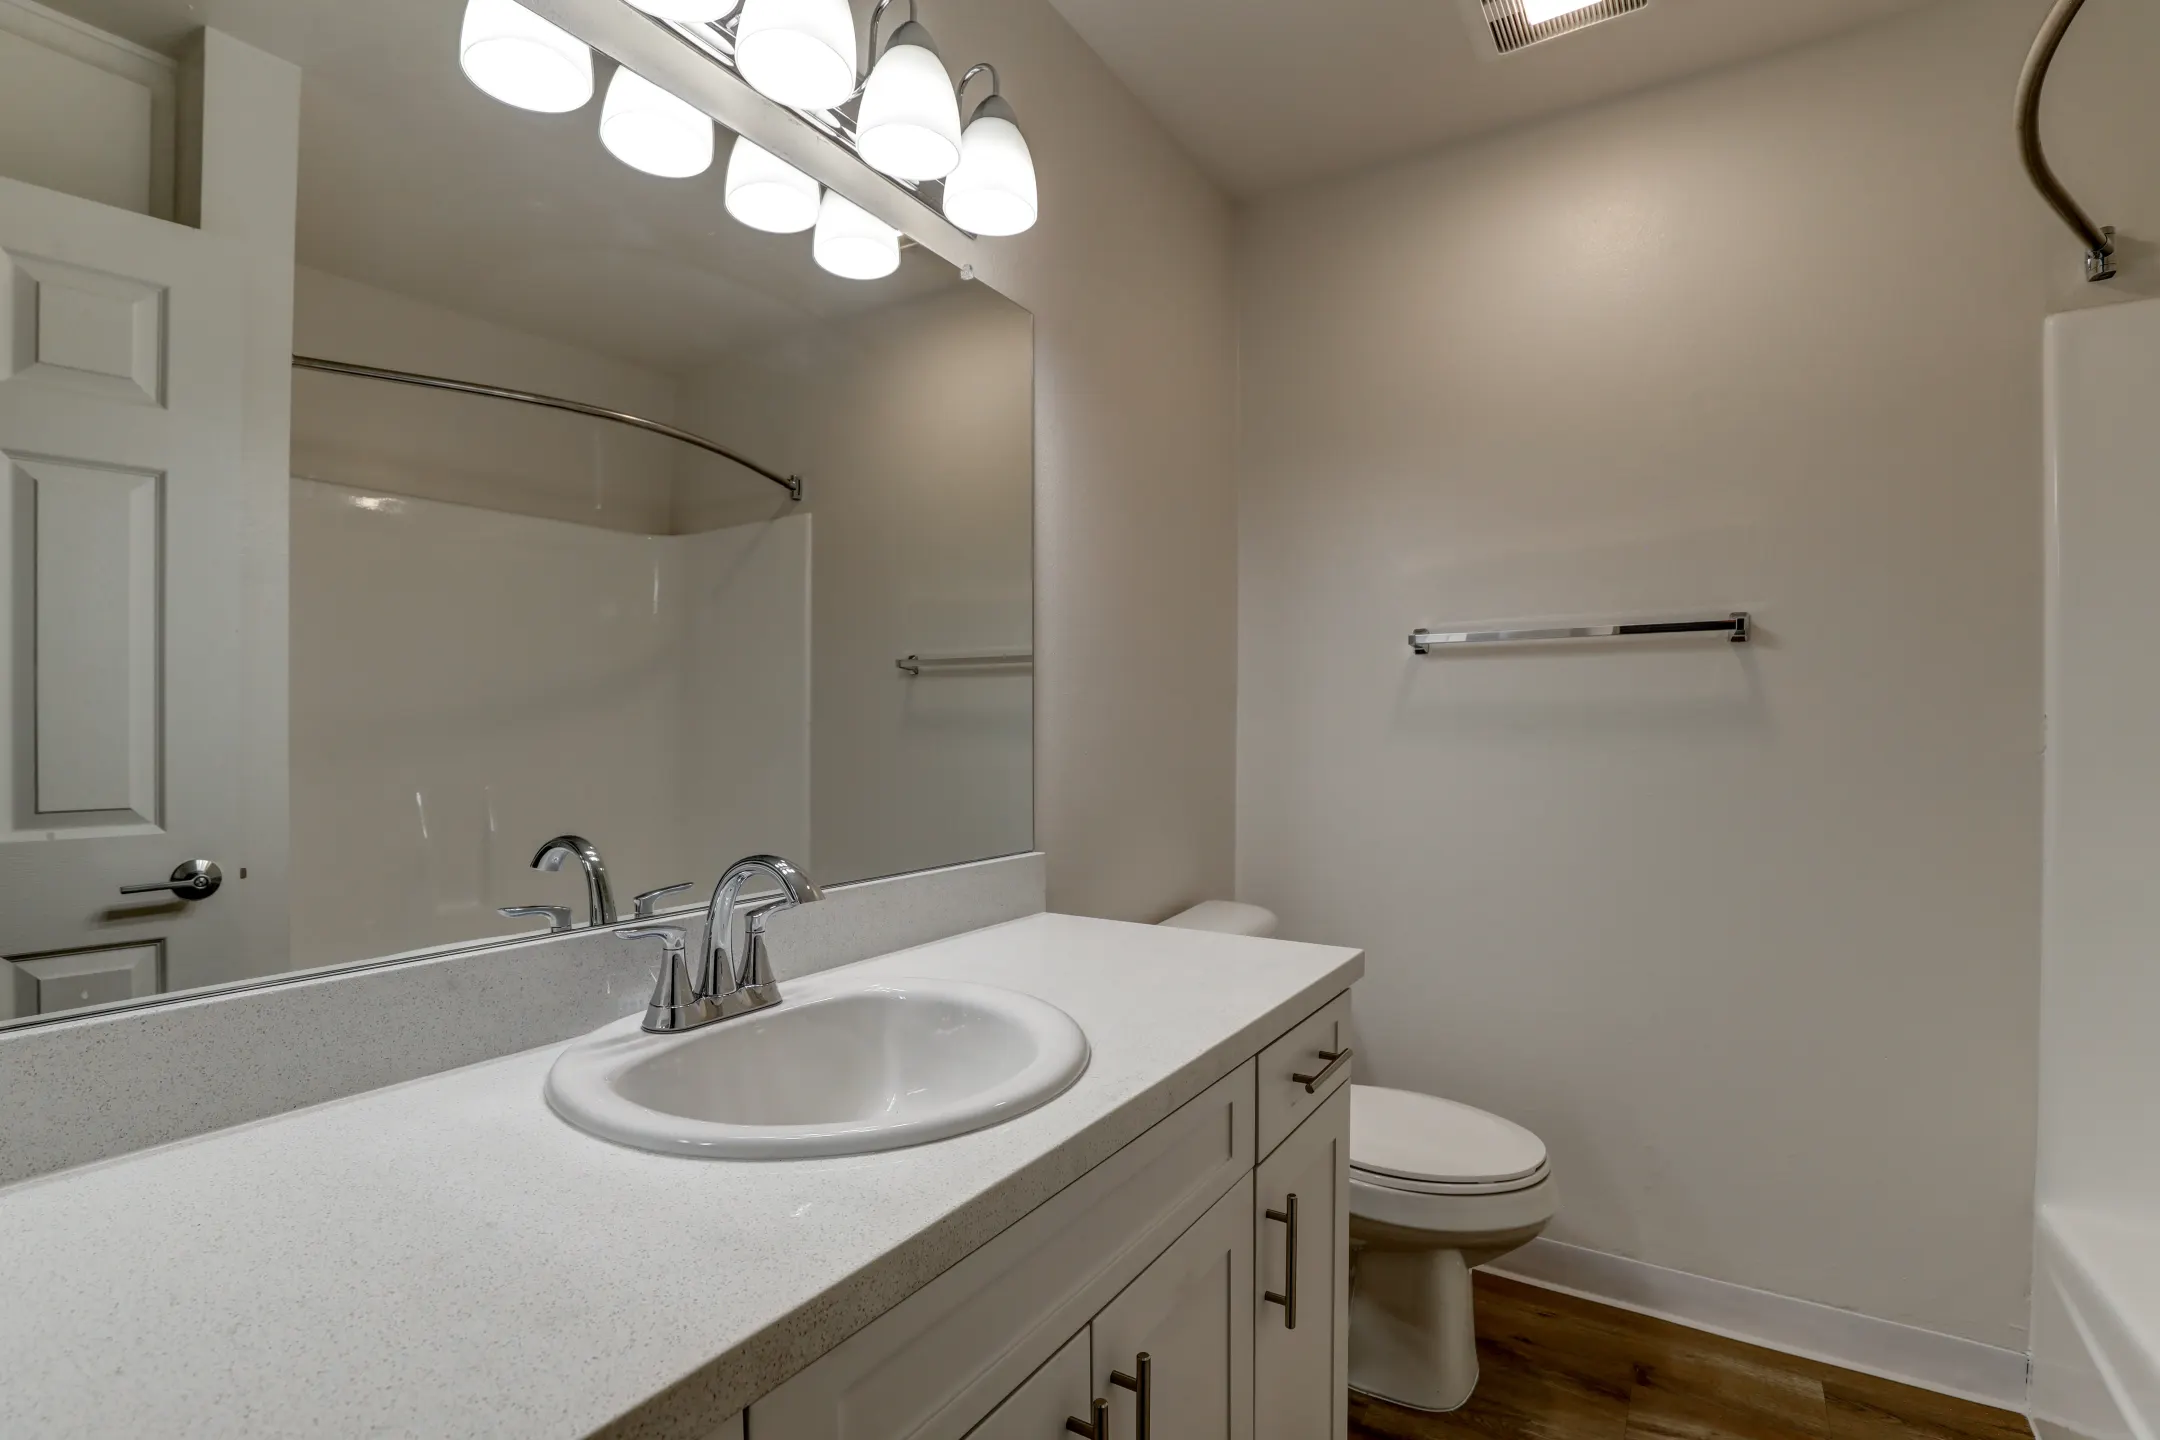 Bathroom - Tustin Village Apartments - Tustin, CA